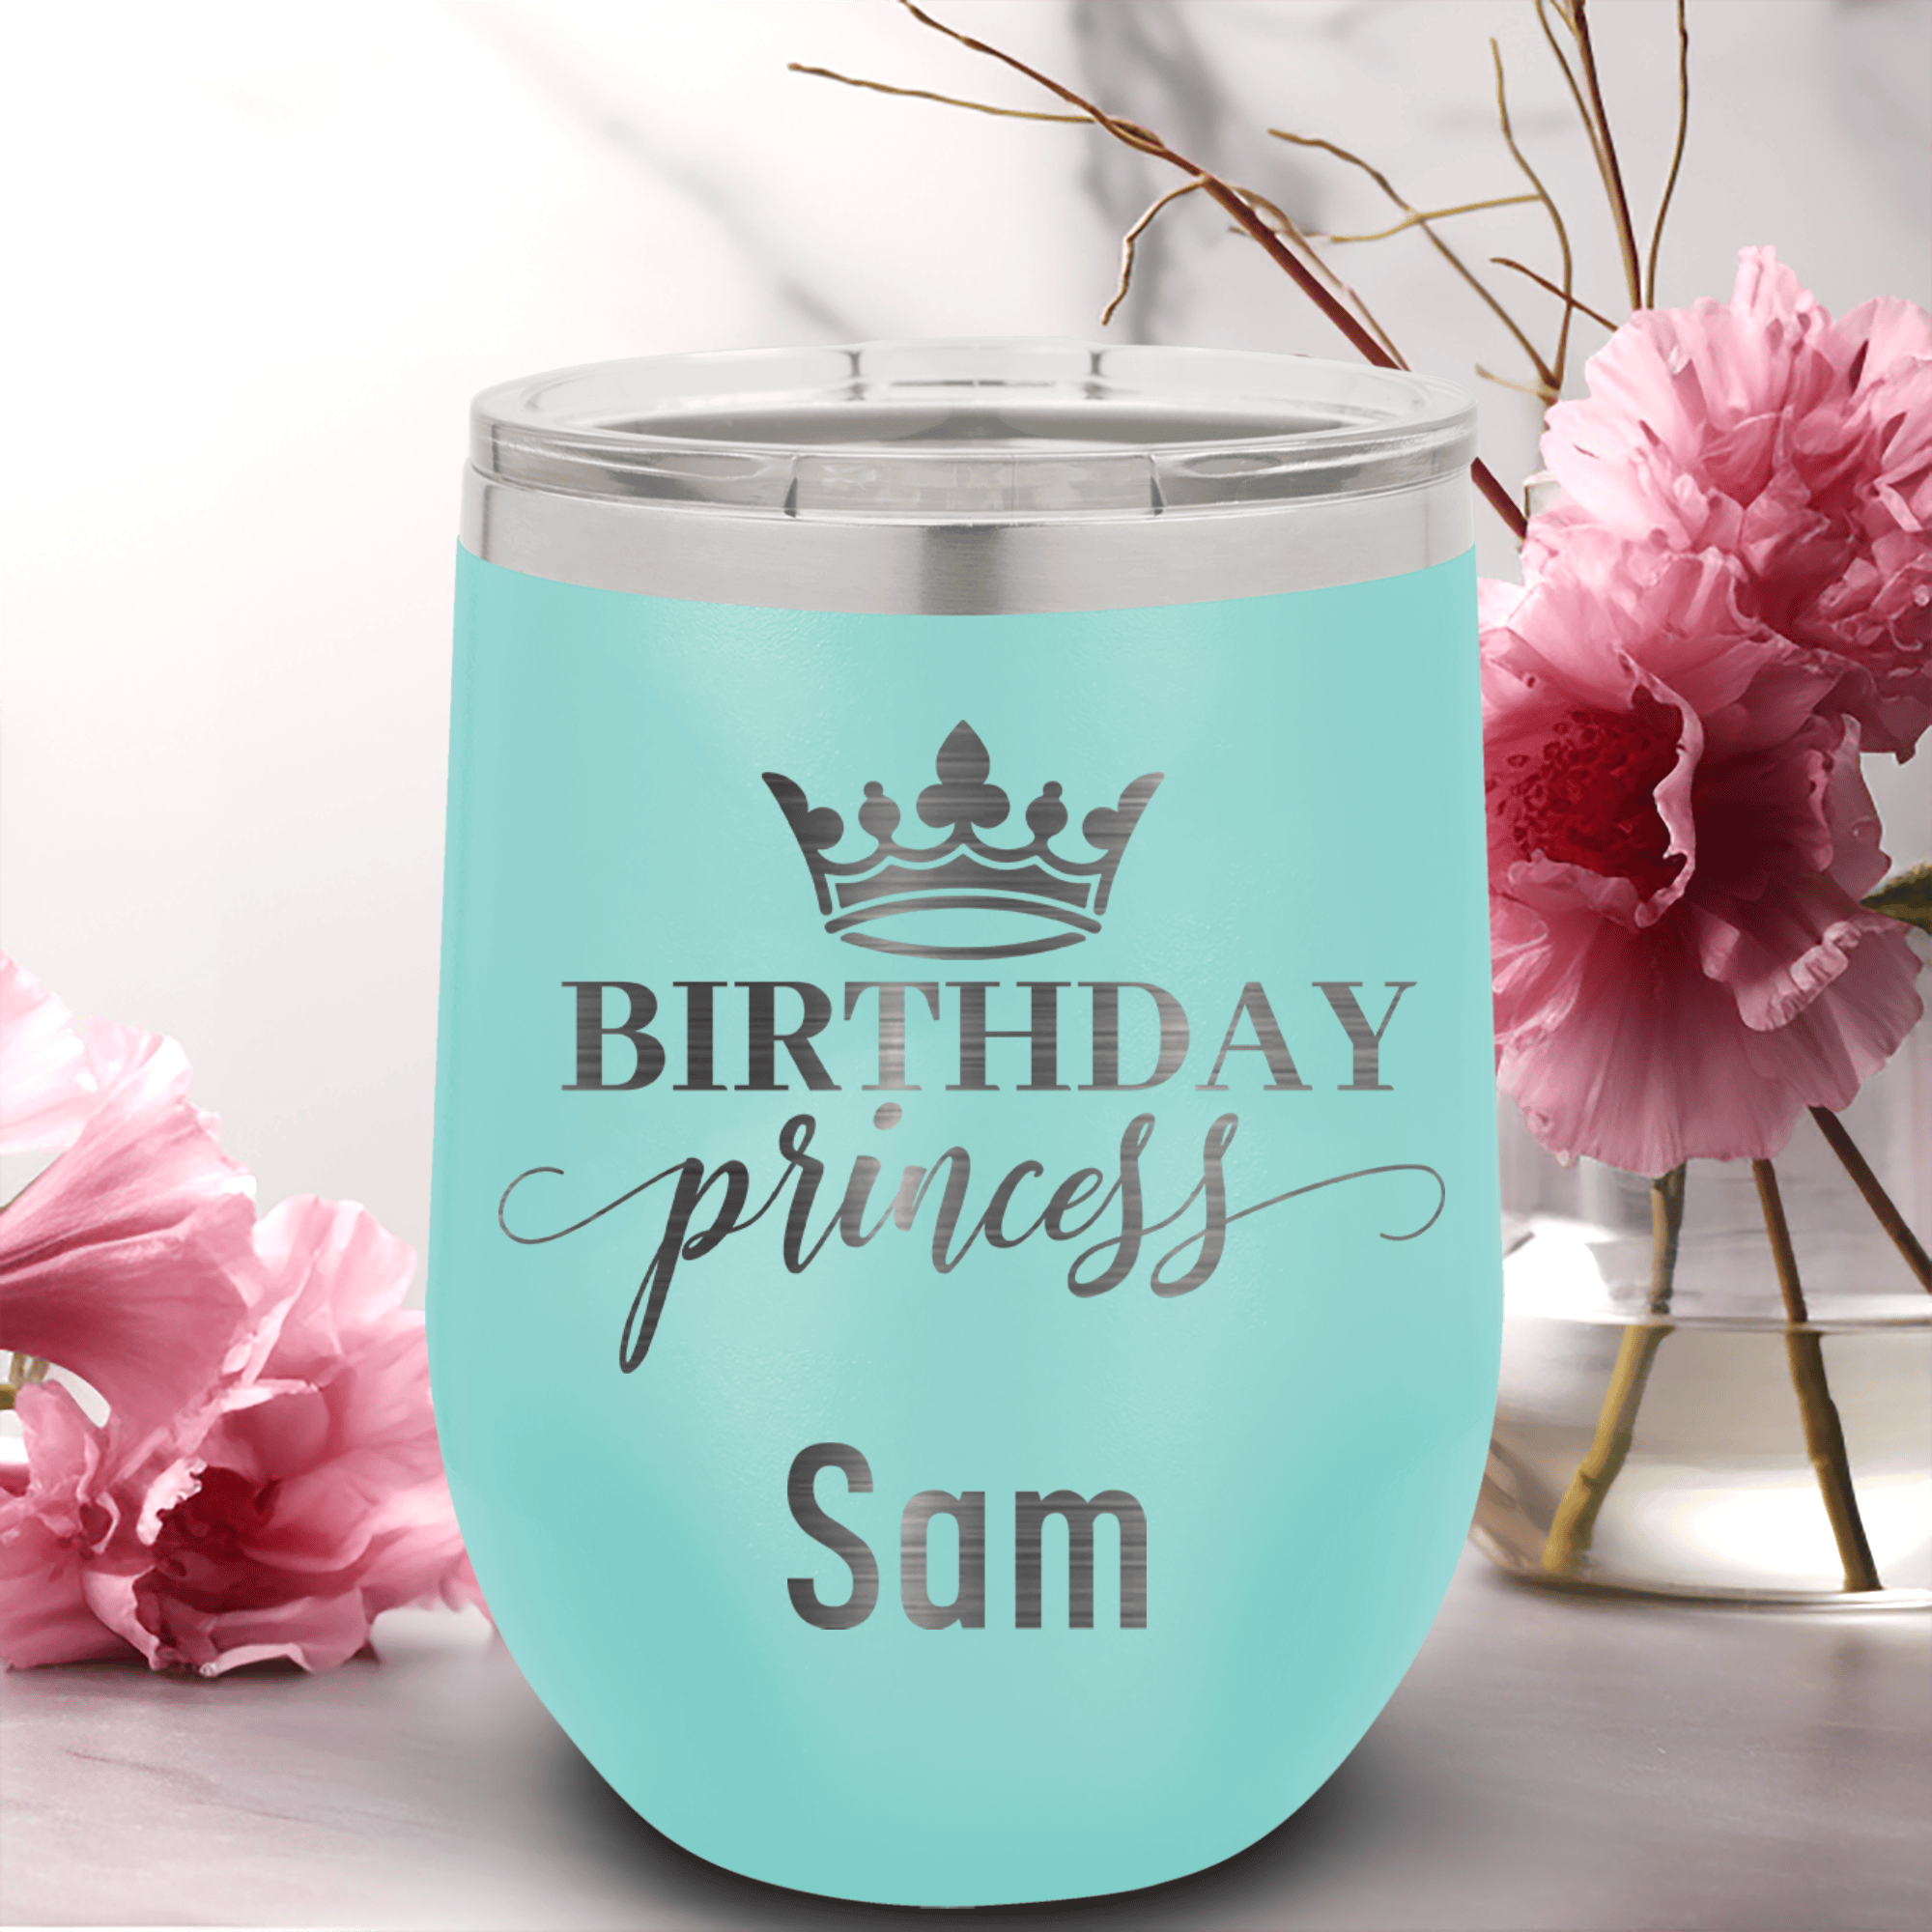 Teal Birthday Wine Tumbler With Birthday Princess Design